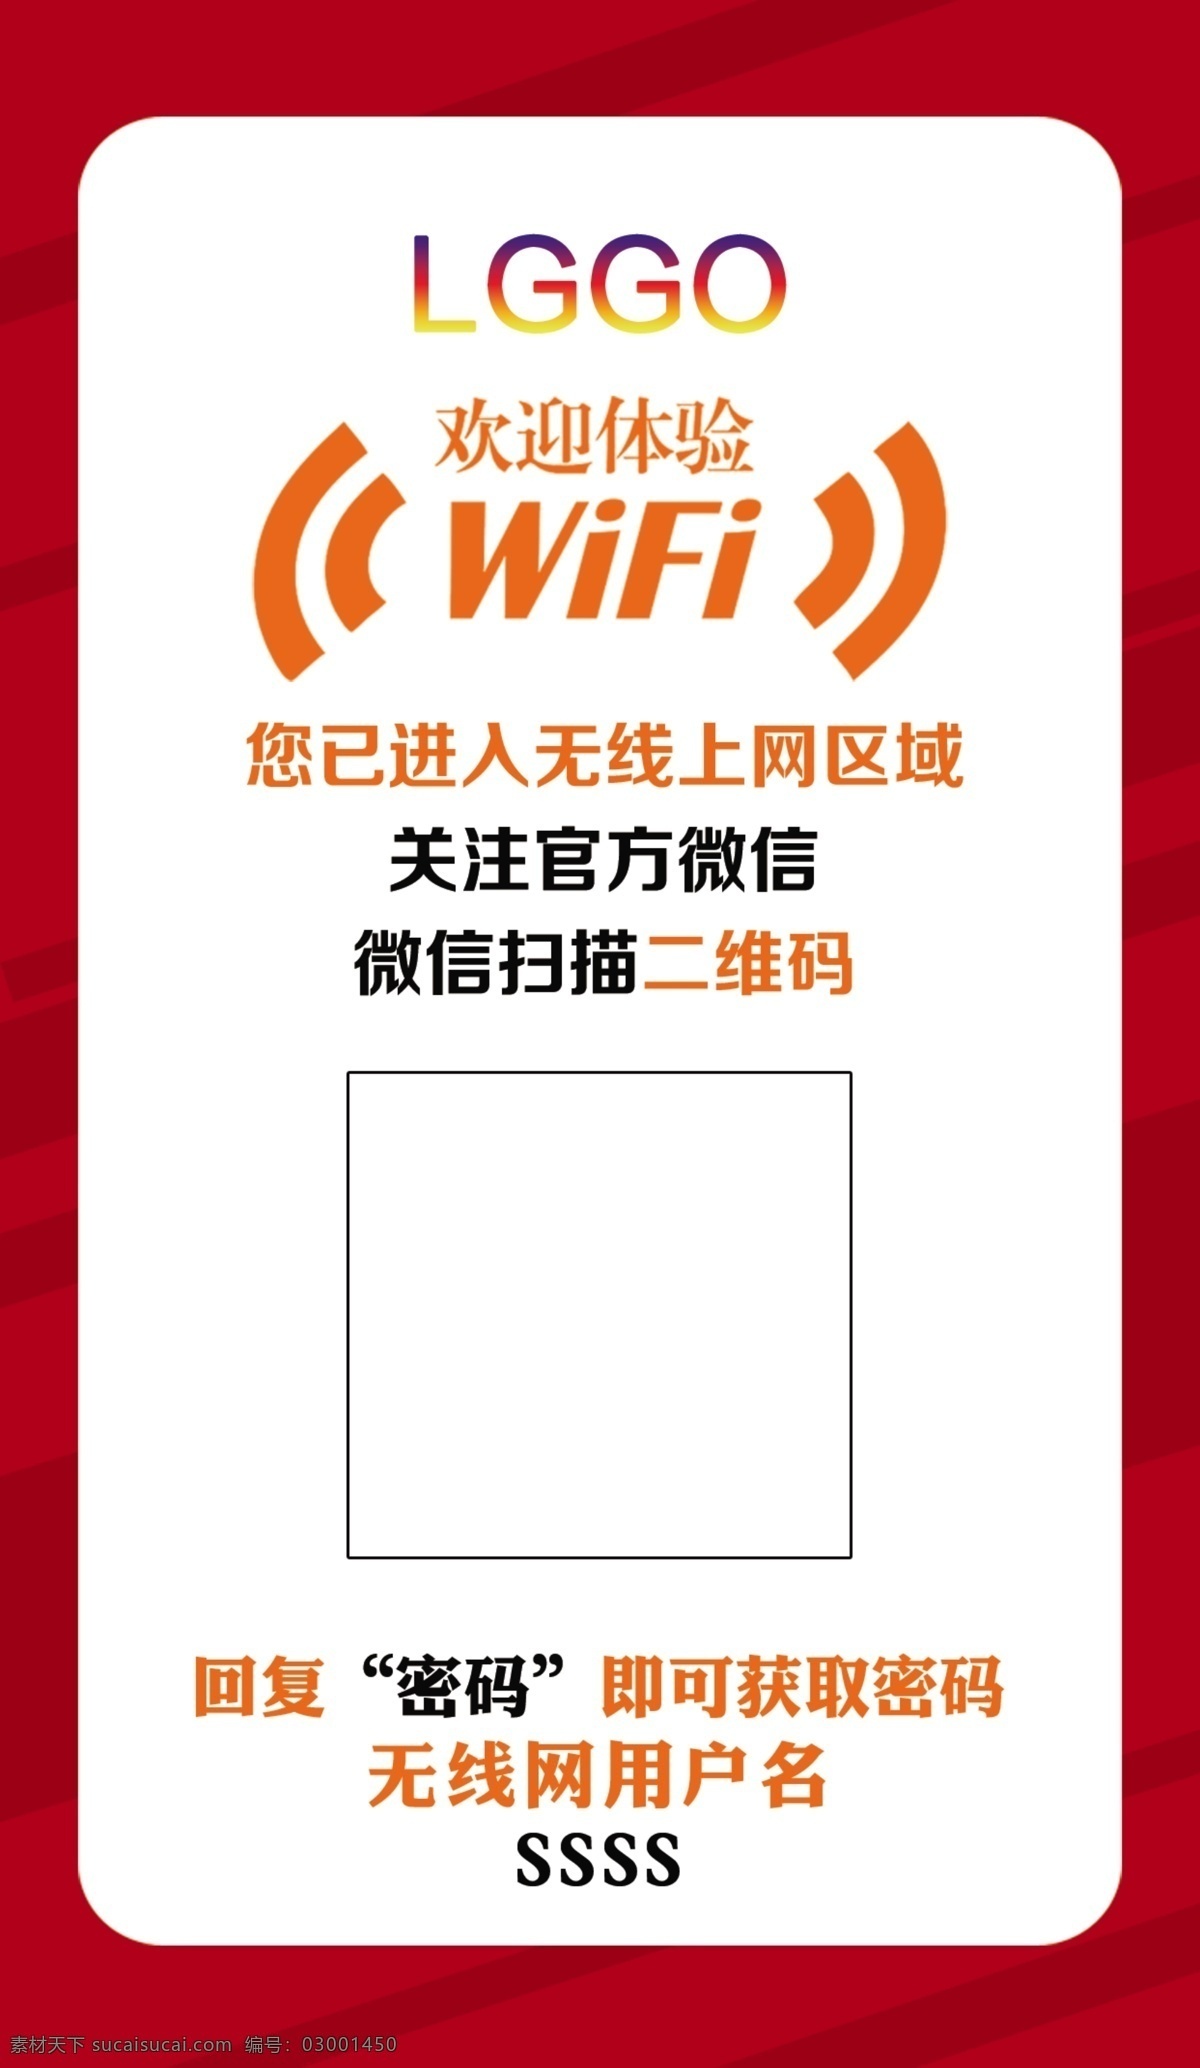 wifi连接 wifi 无线 上网 扫一扫 连接 扫码上网 连接无线 密码 官方 关注 区域 办公 公共 提示 温馨提示招贴 招贴设计